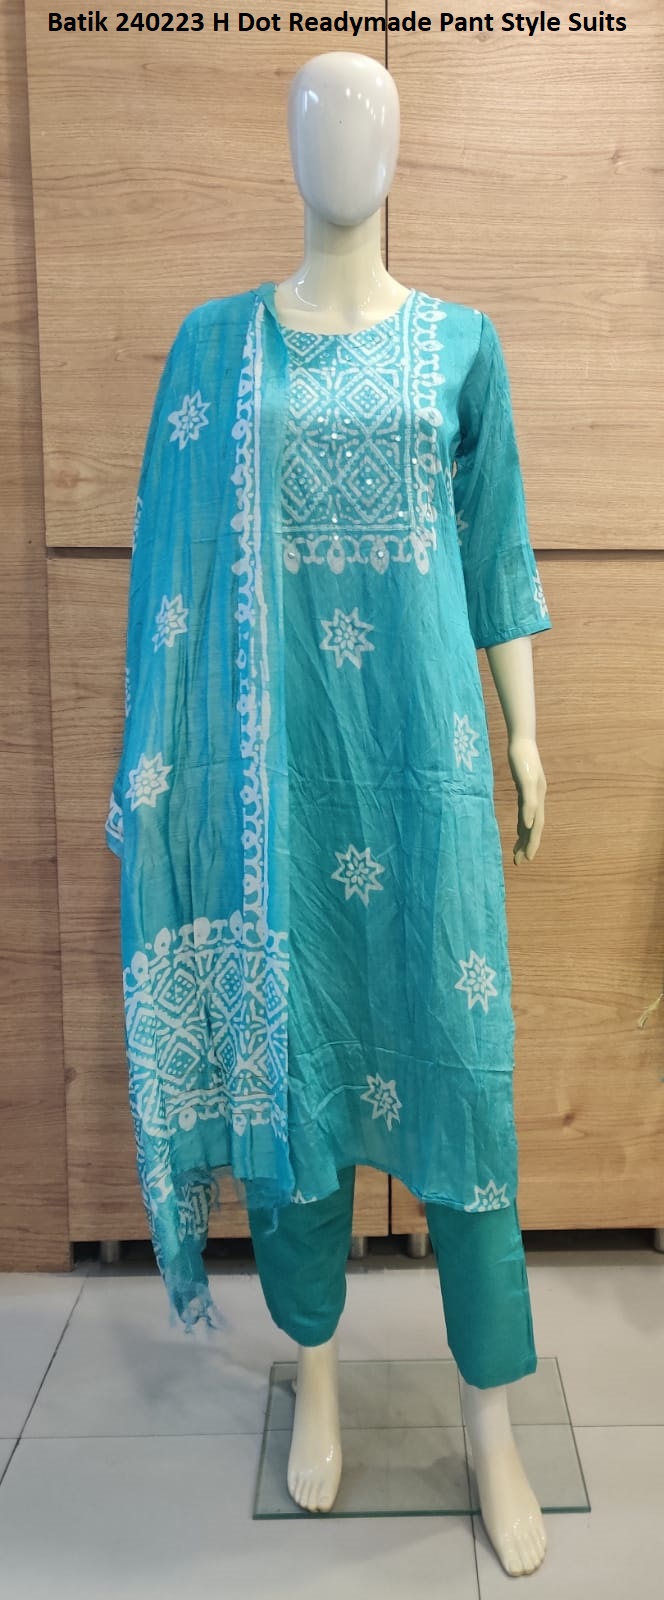 Buy Chanderi Printed Batik 240223 H Dot Readymade Pant Style